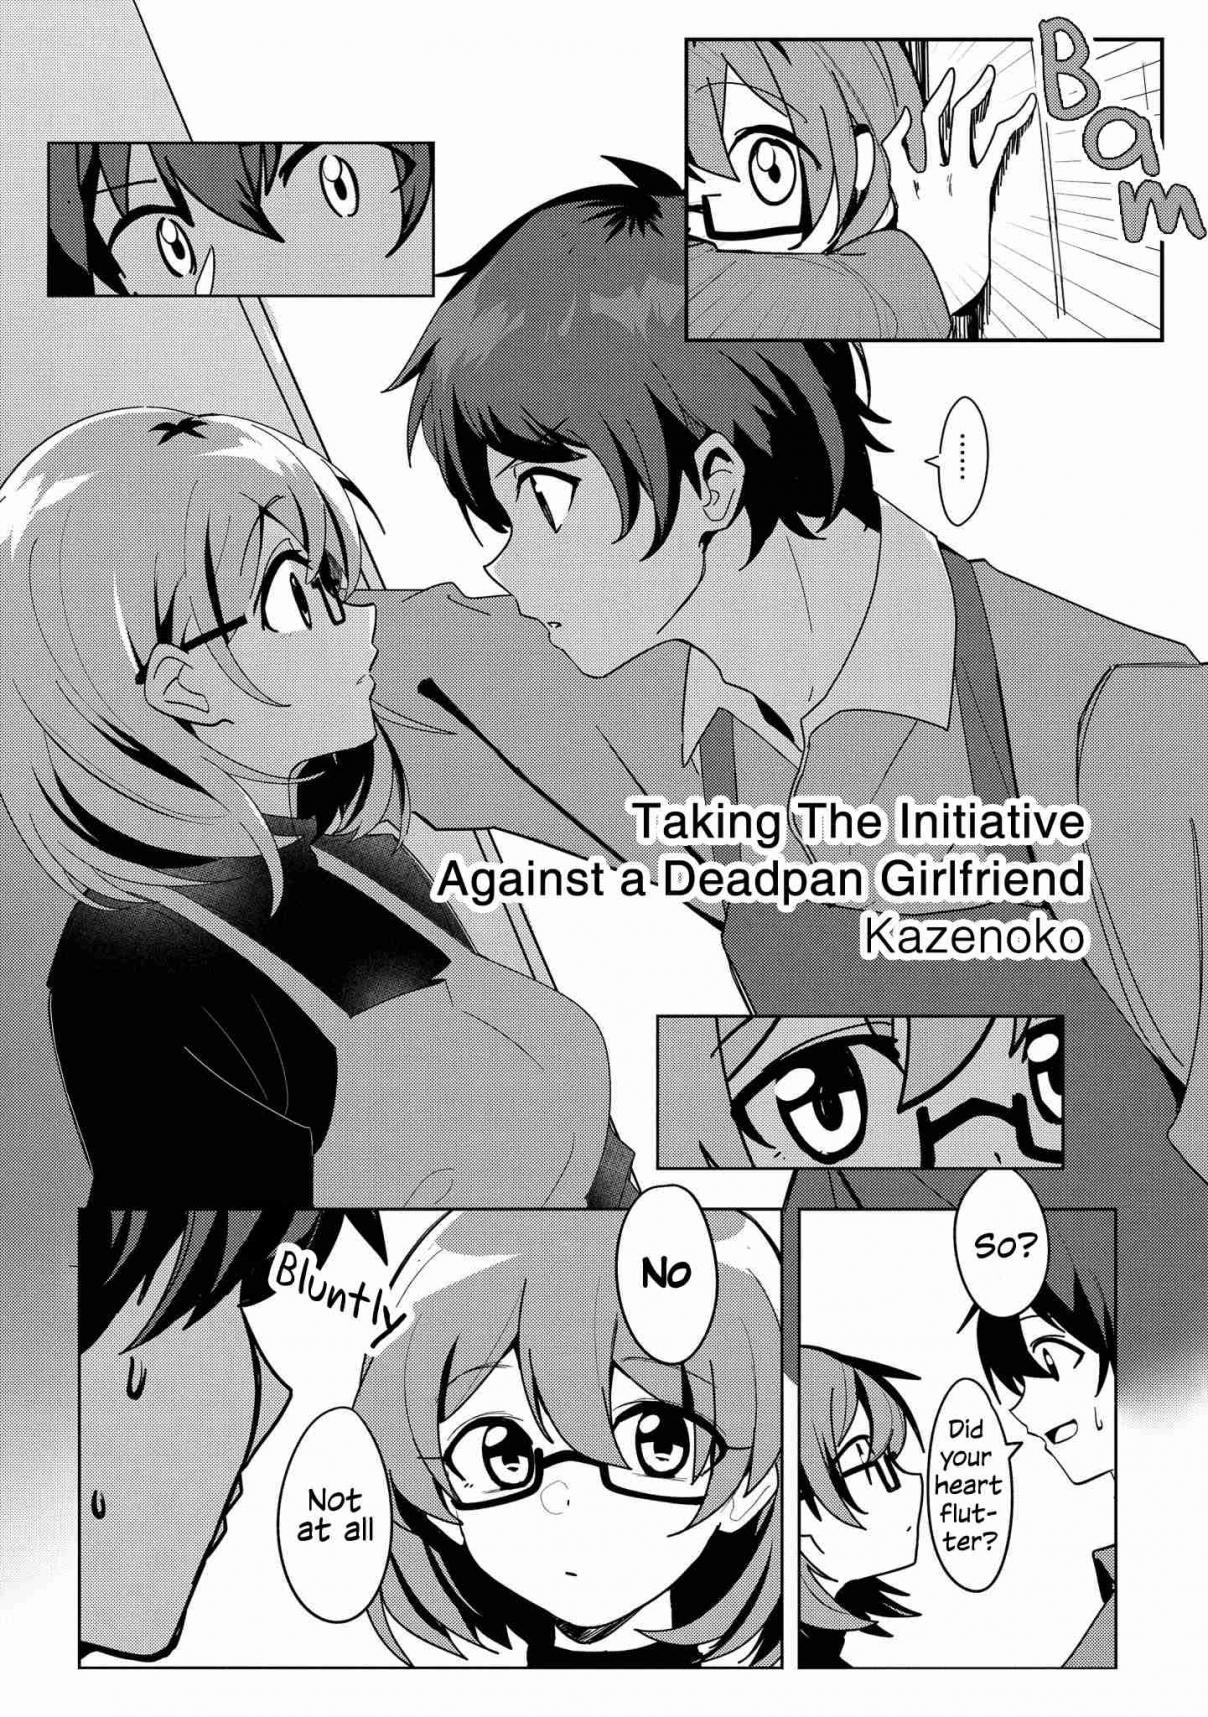 Precious 4p Short Stories Ch. 18 Taking The Initiative Against a Deadpan Girlfriend [by Kazenoko]